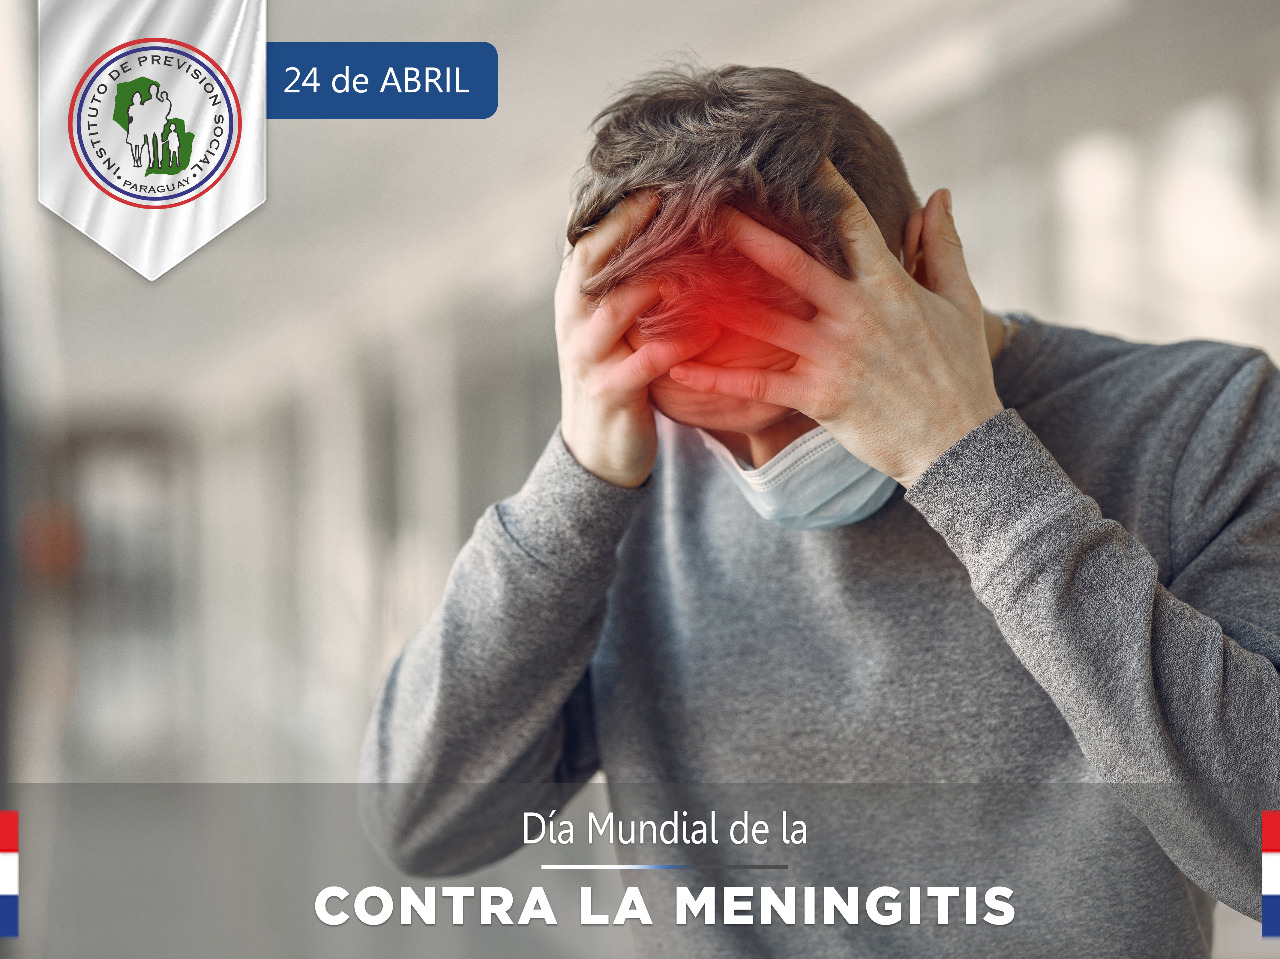 24 de abril: Día Mundial contra la Meningitis nos invita a prevenir